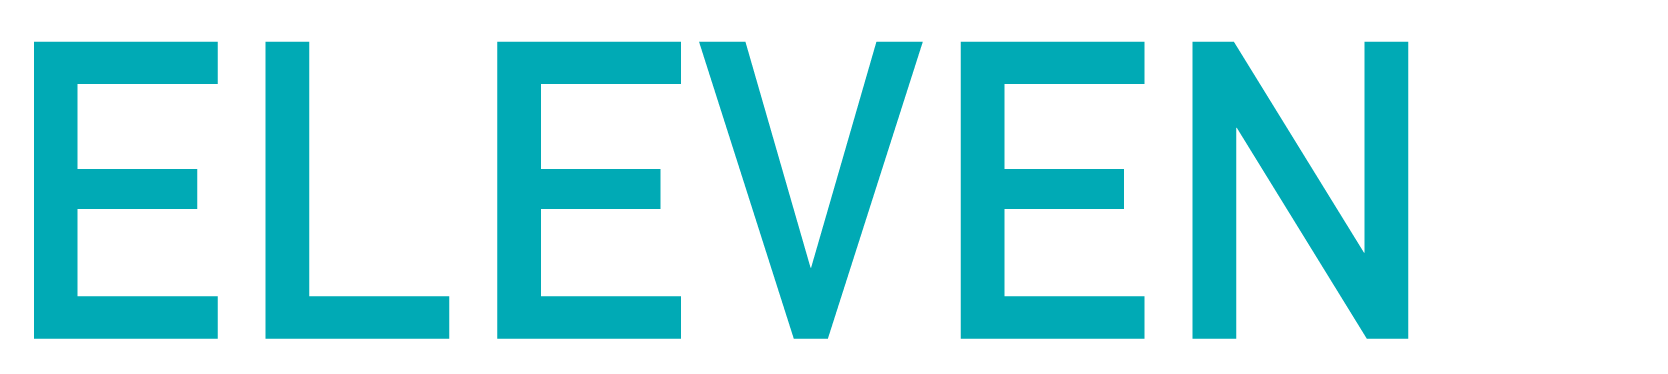 Eleven11 Logo